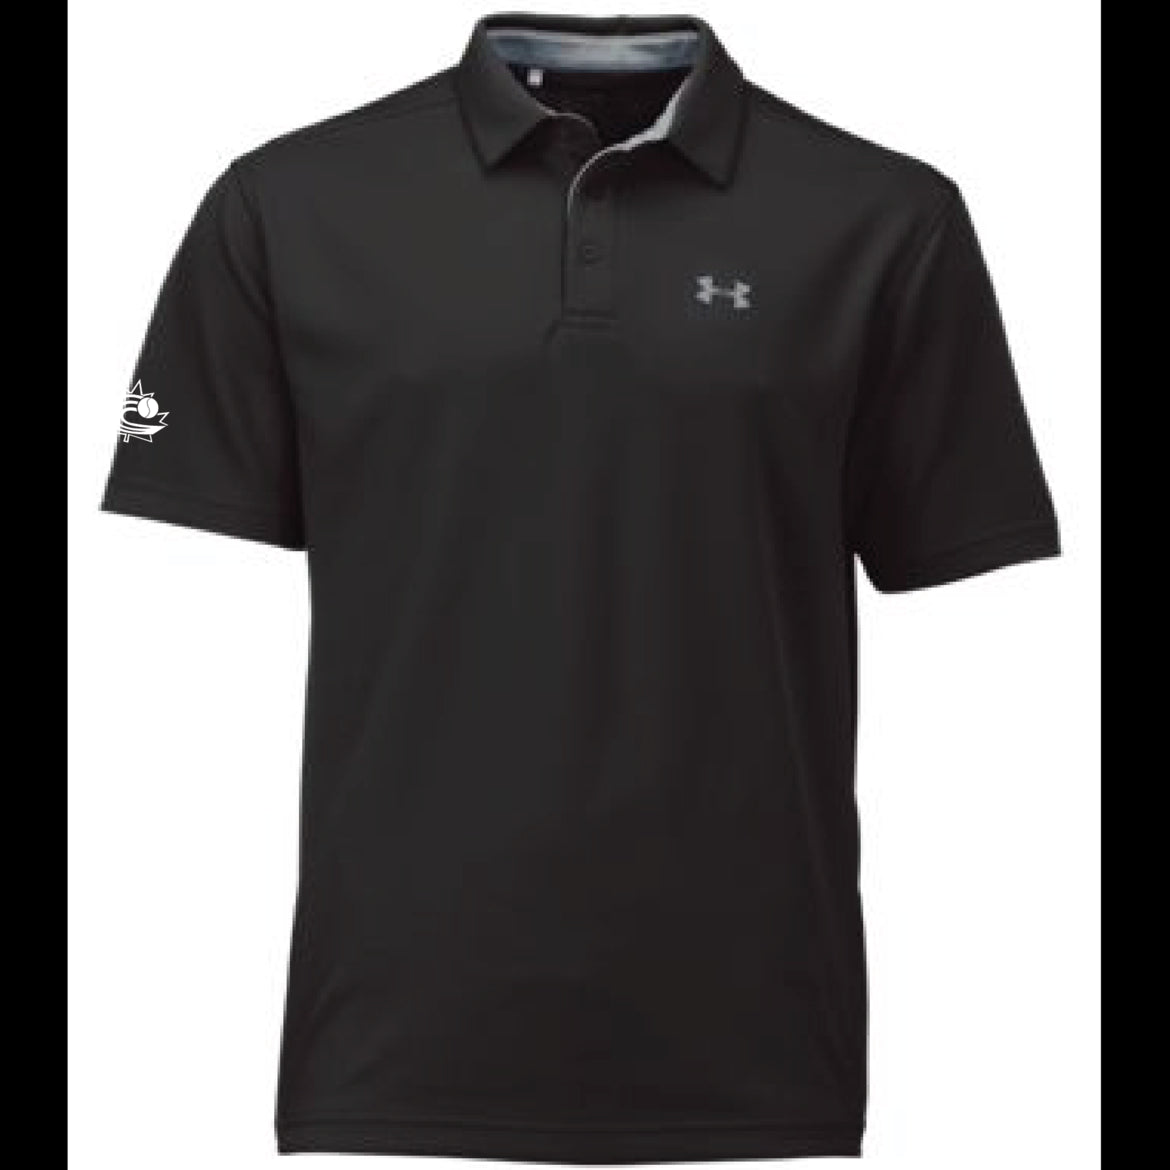 Baseball Canada Golf Shirts|Baseball Canada T-shirts et chemises de golfirt